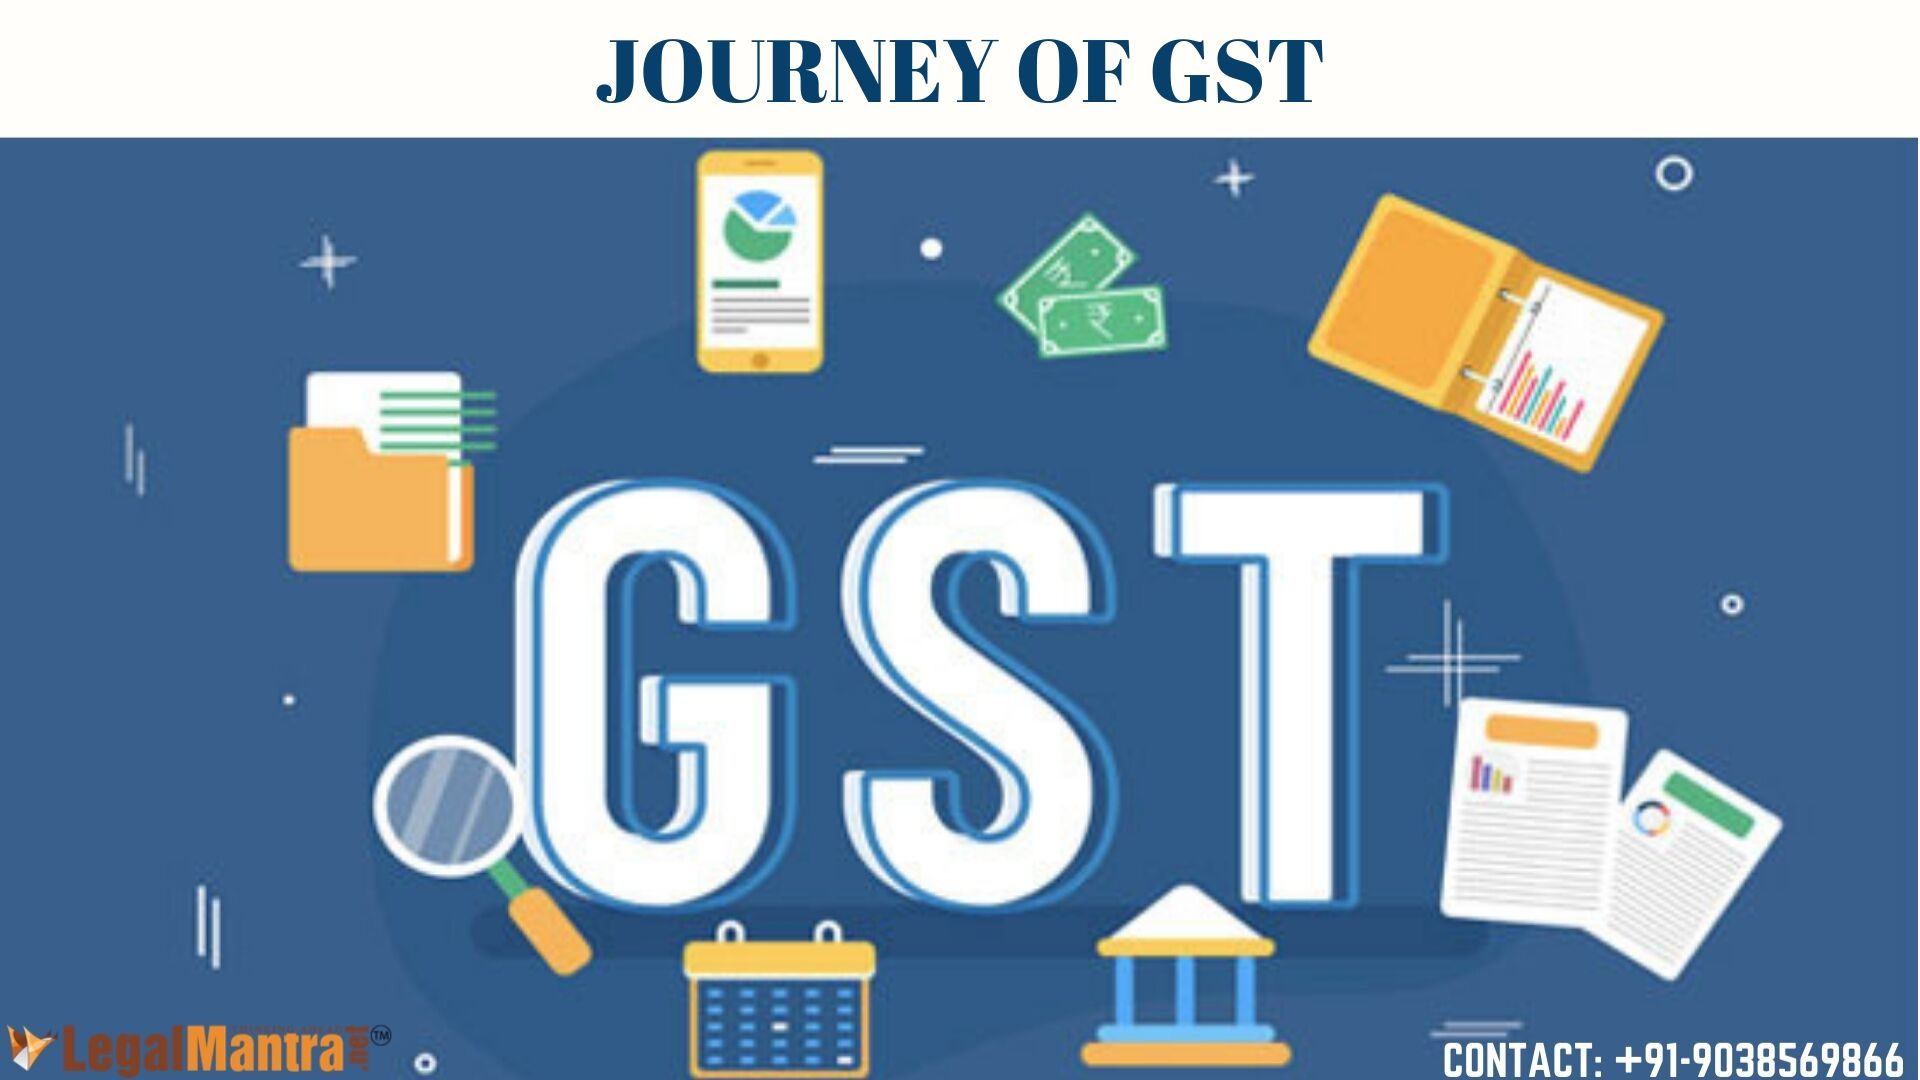 Journey of GST